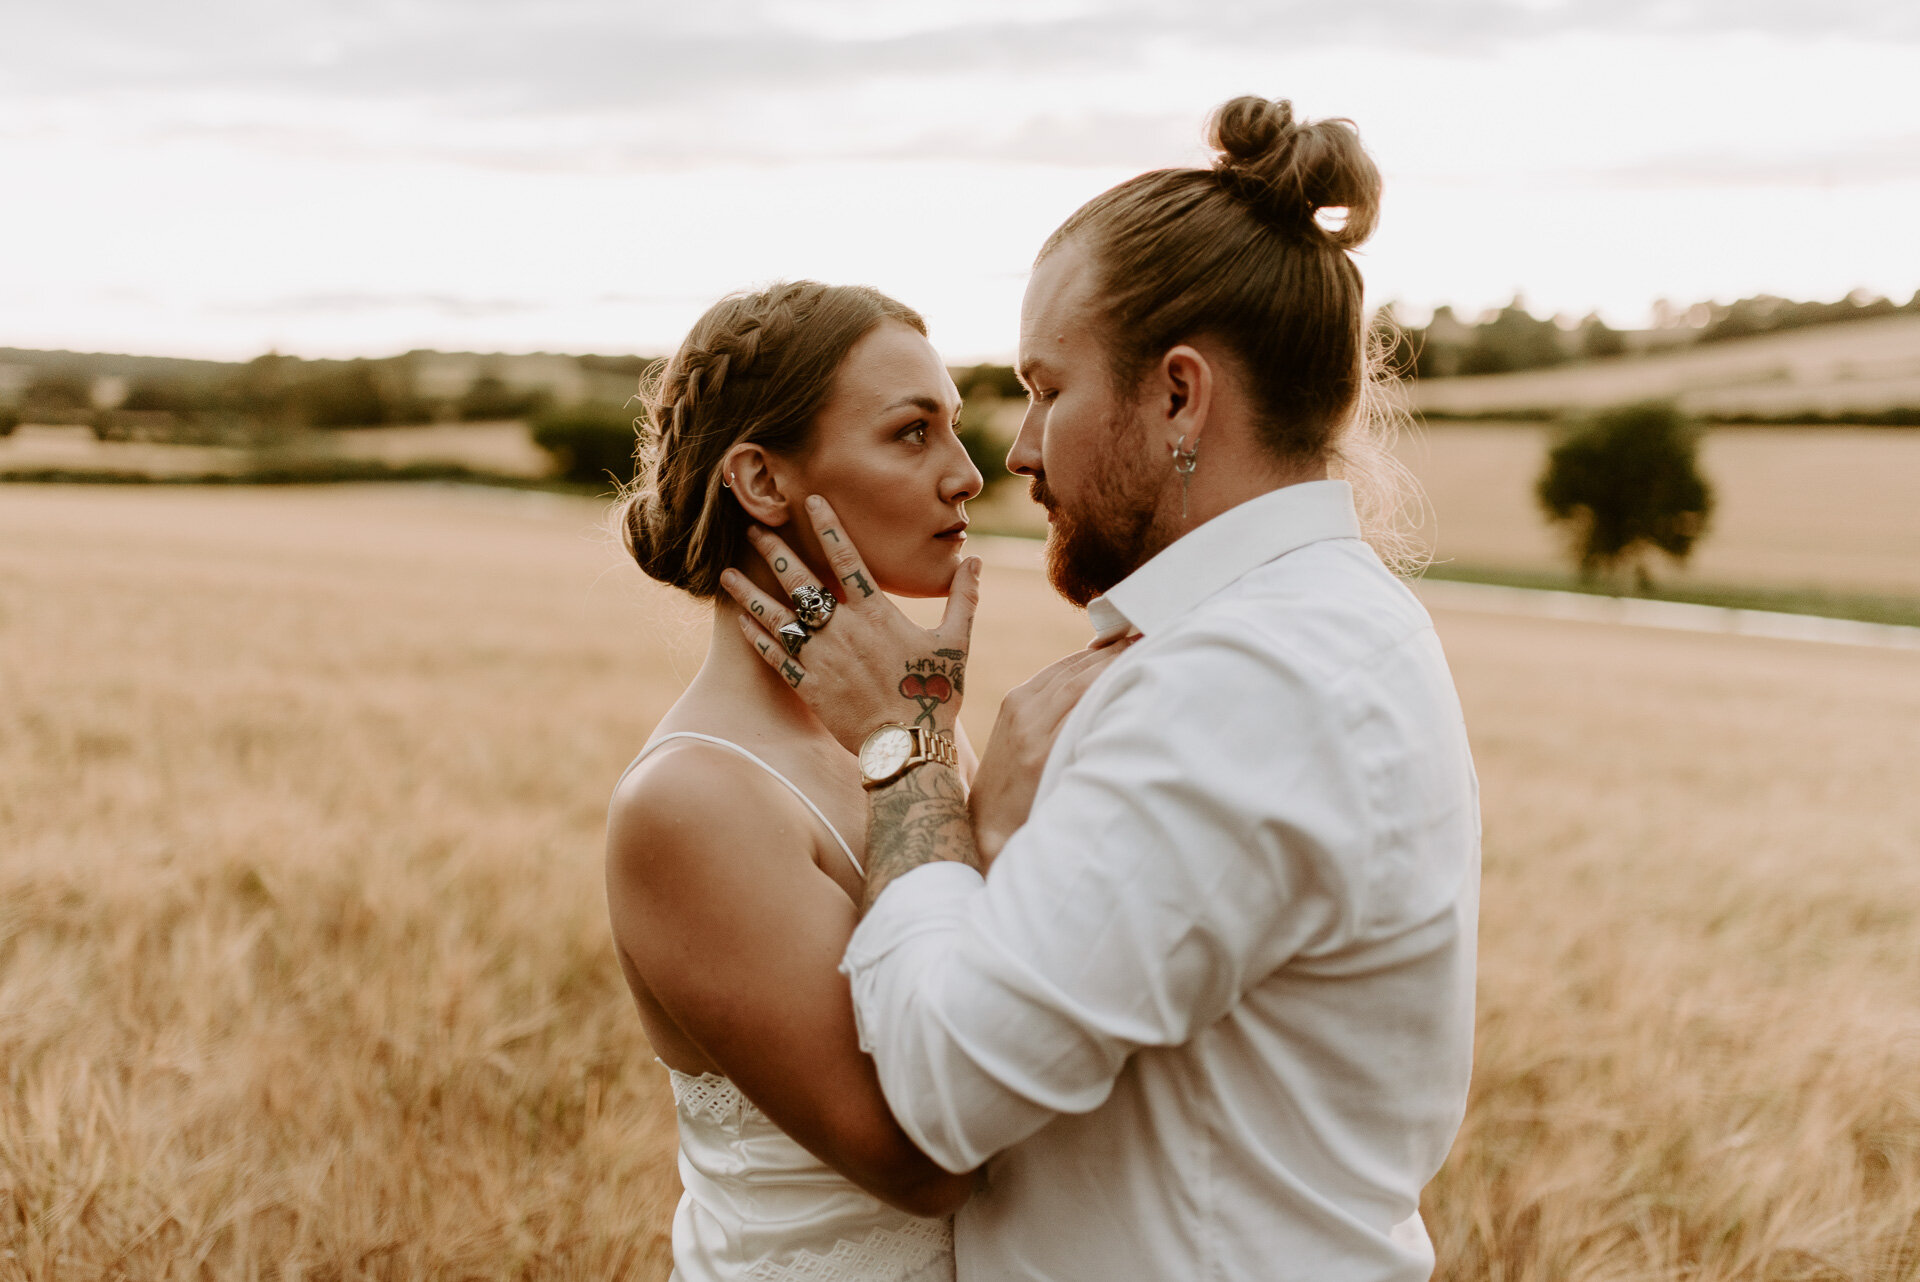 Romantic Boho Wedding Shoot - 25 July - Laura Williams Photography - LR-142 - Bury Court Barn.jpg